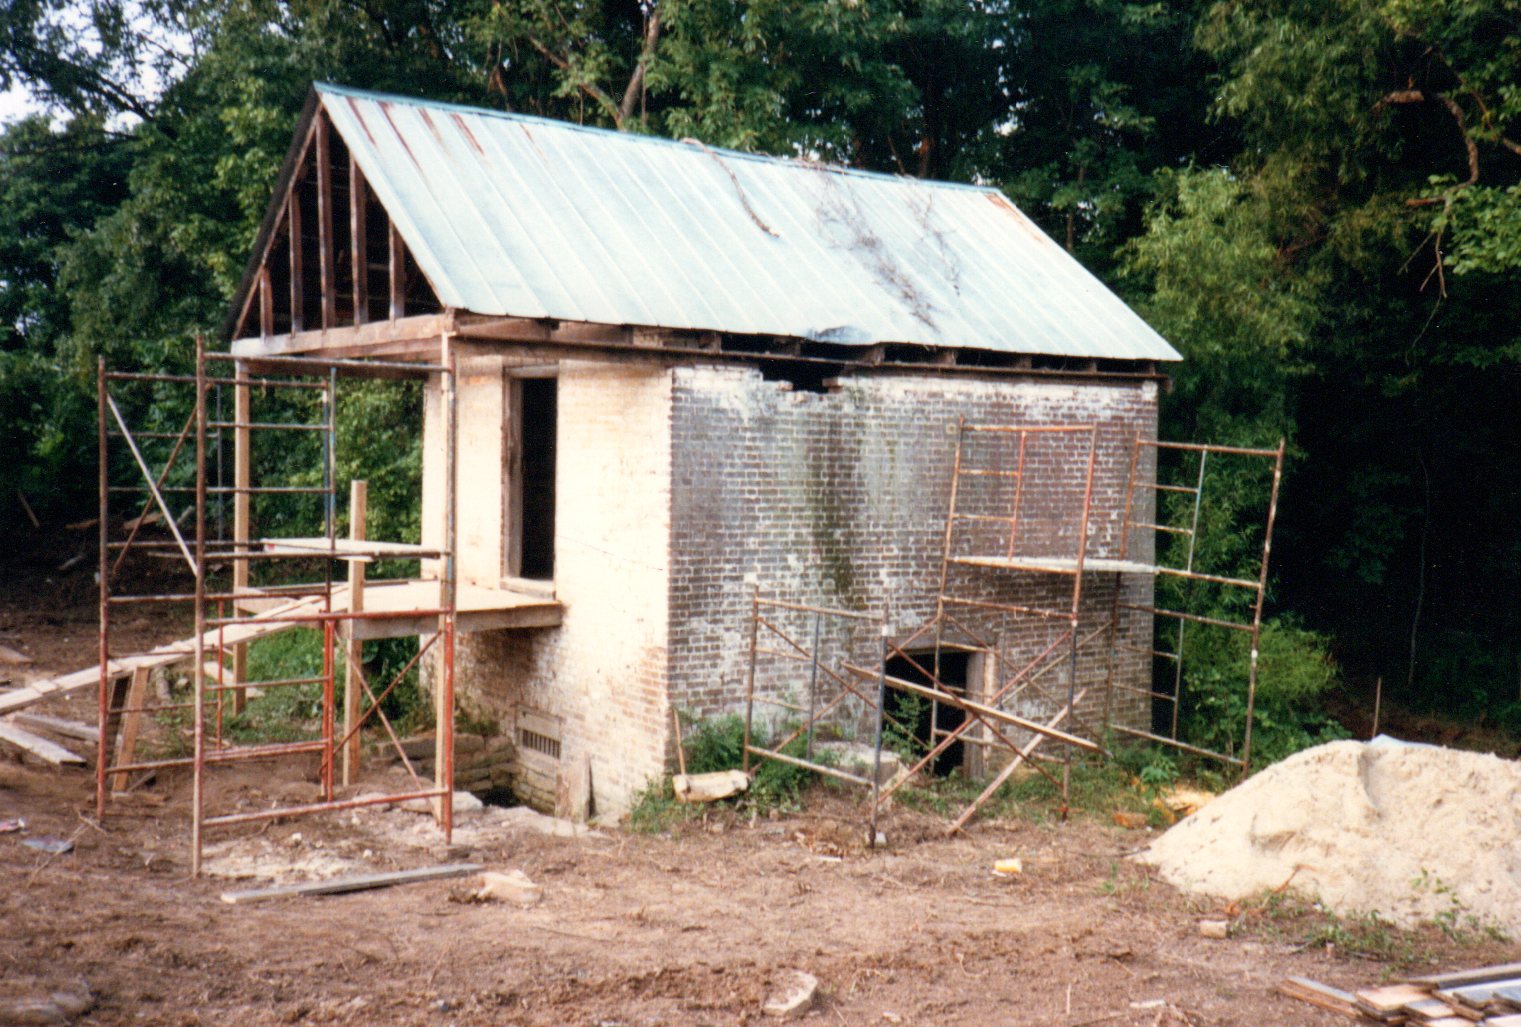 Springhouse, 1987